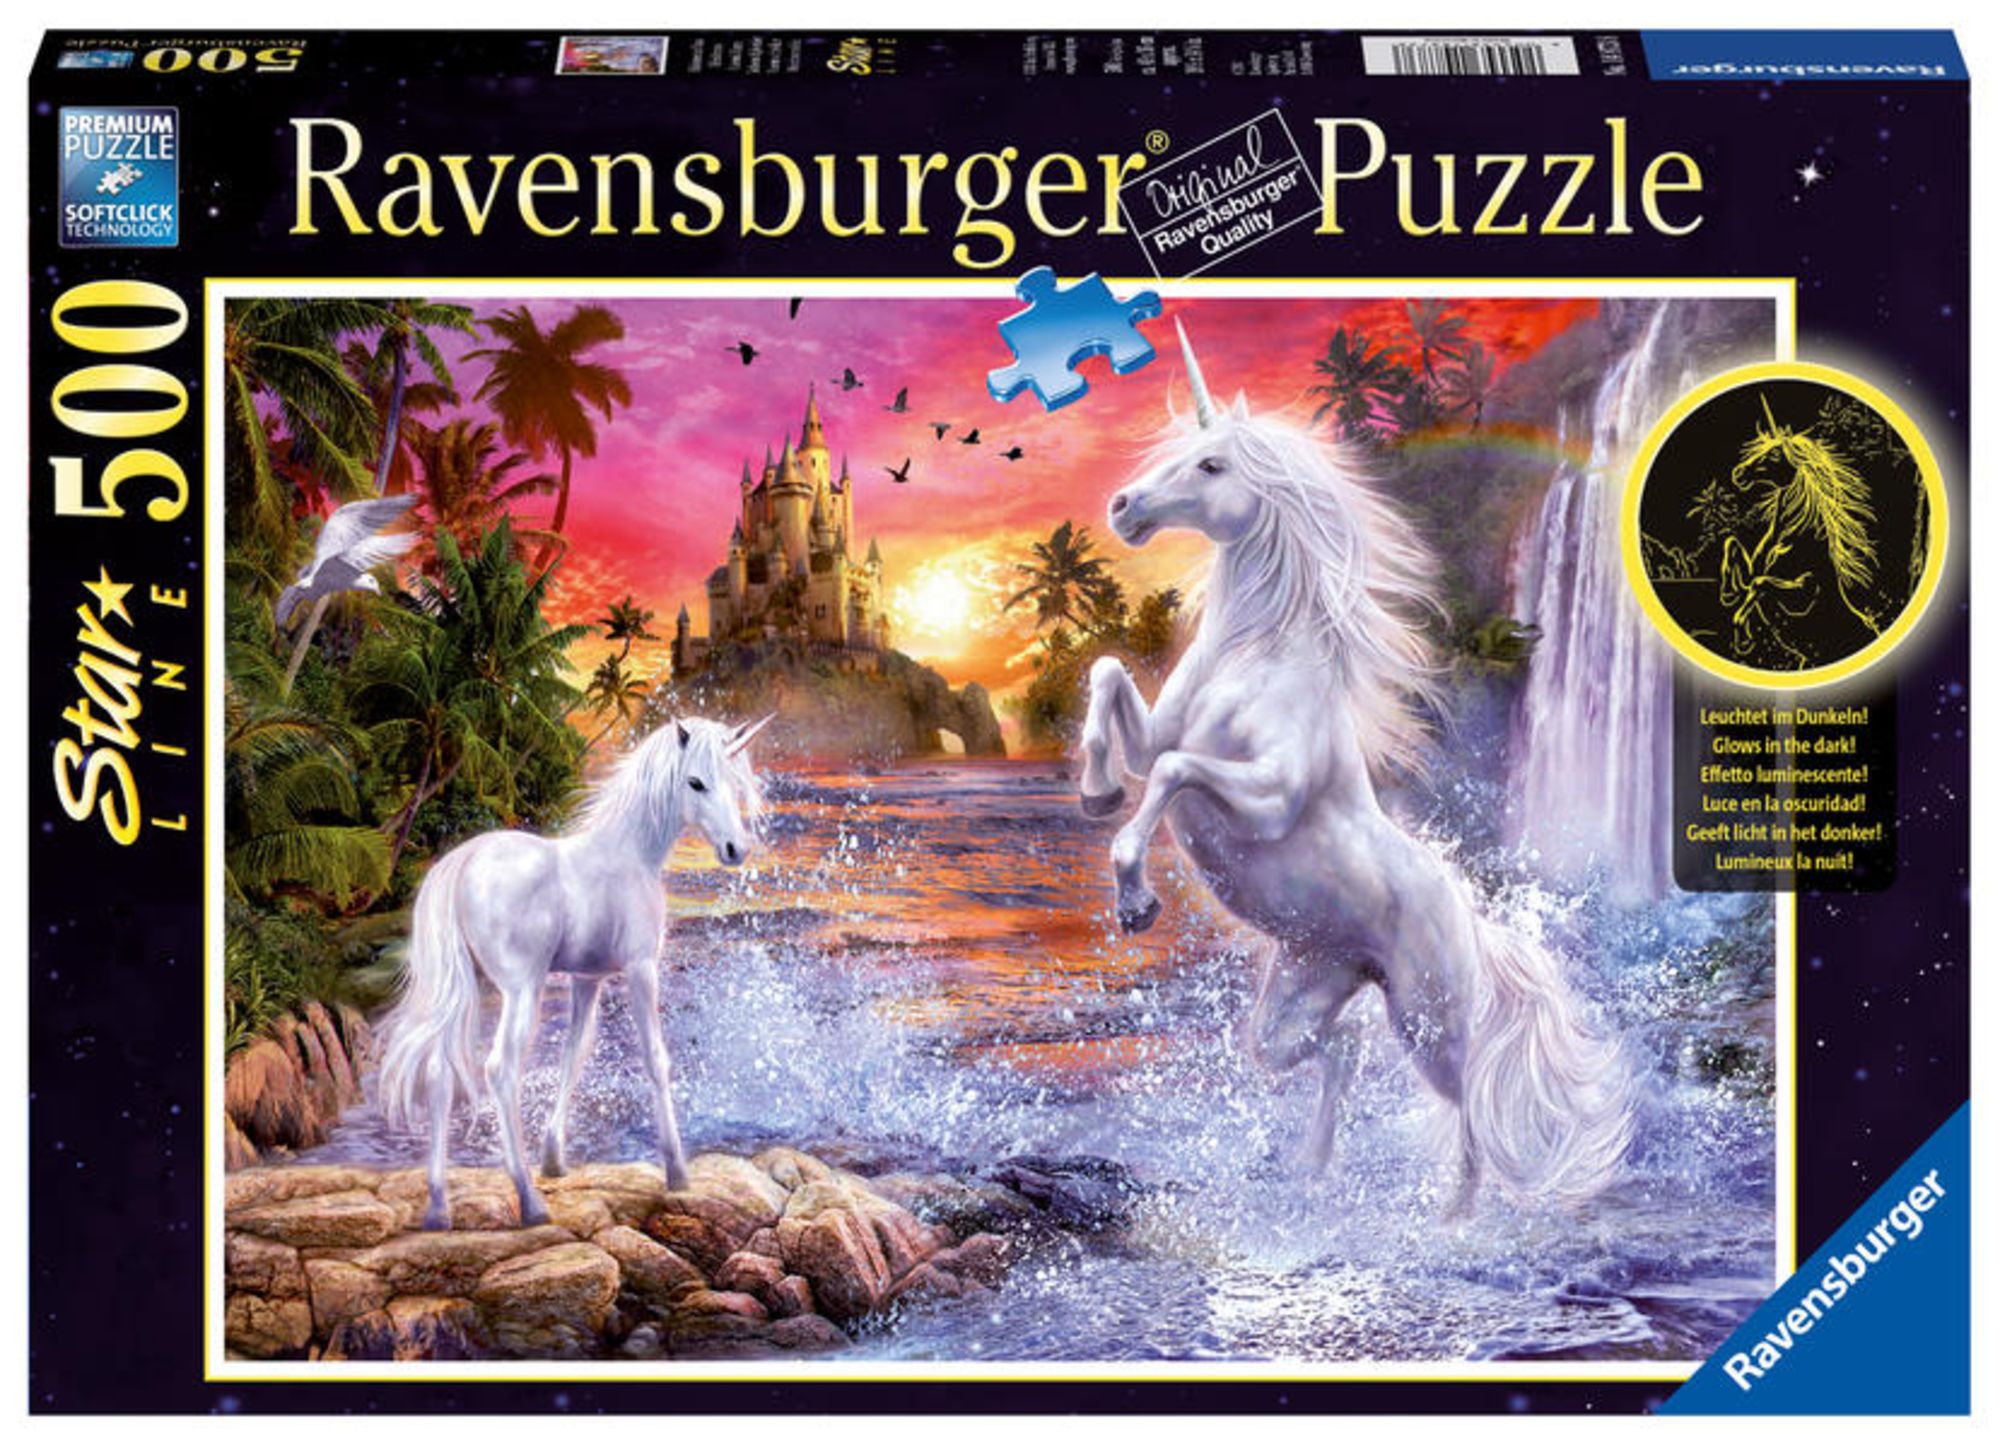 Ravensburger Puzzle Board - acheter sur Galaxus